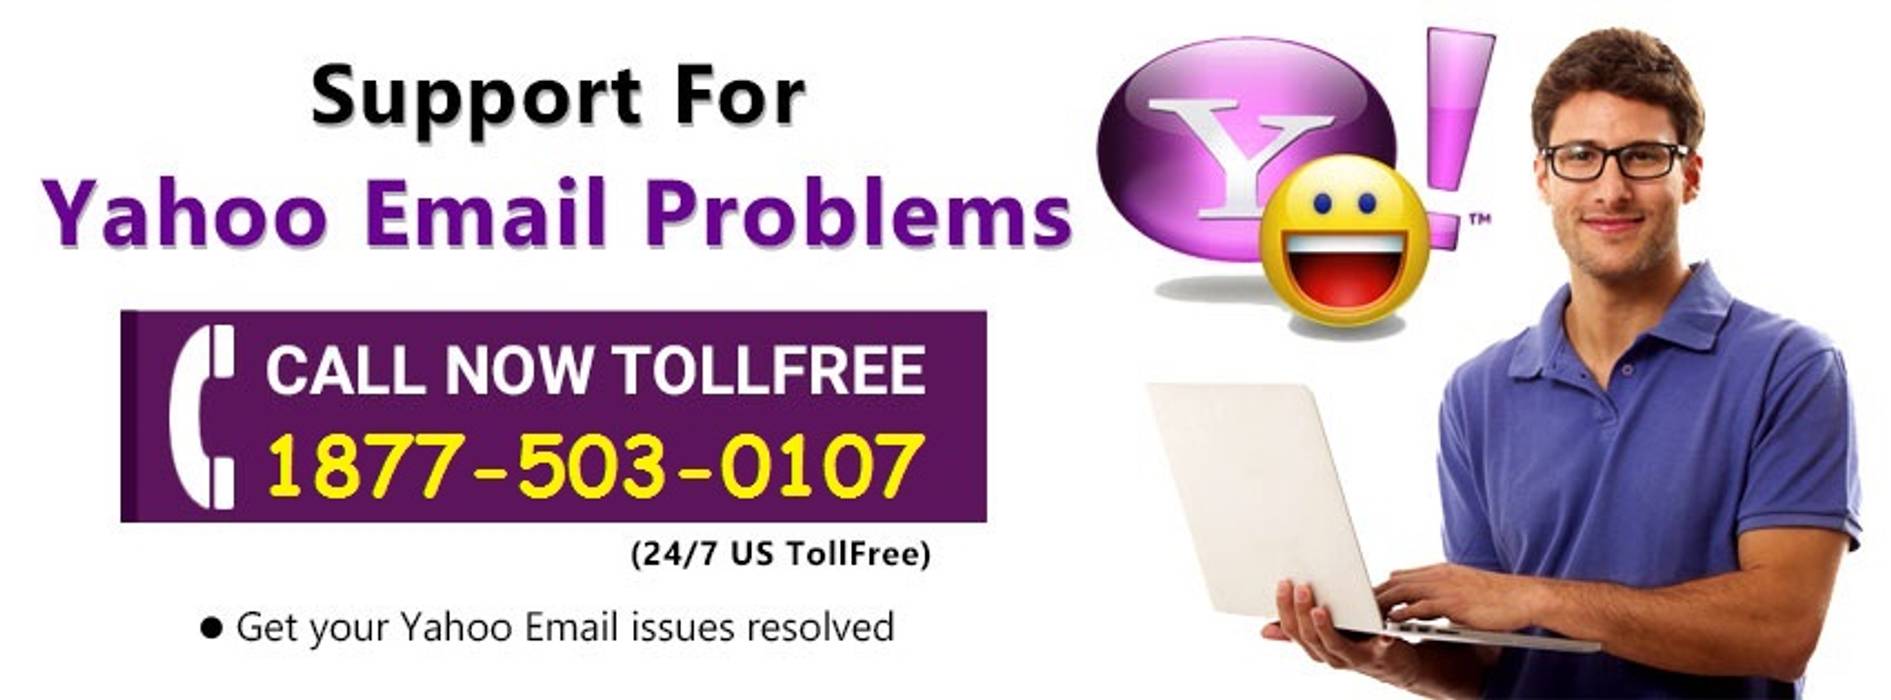 Contact Yahoo Customer Support Phone Number 1877-503-0107, Yahoo Mail Support Number 1877-503-0107 Yahoo Mail Support Number 1877-503-0107 Pisos Derivados de madera Transparente